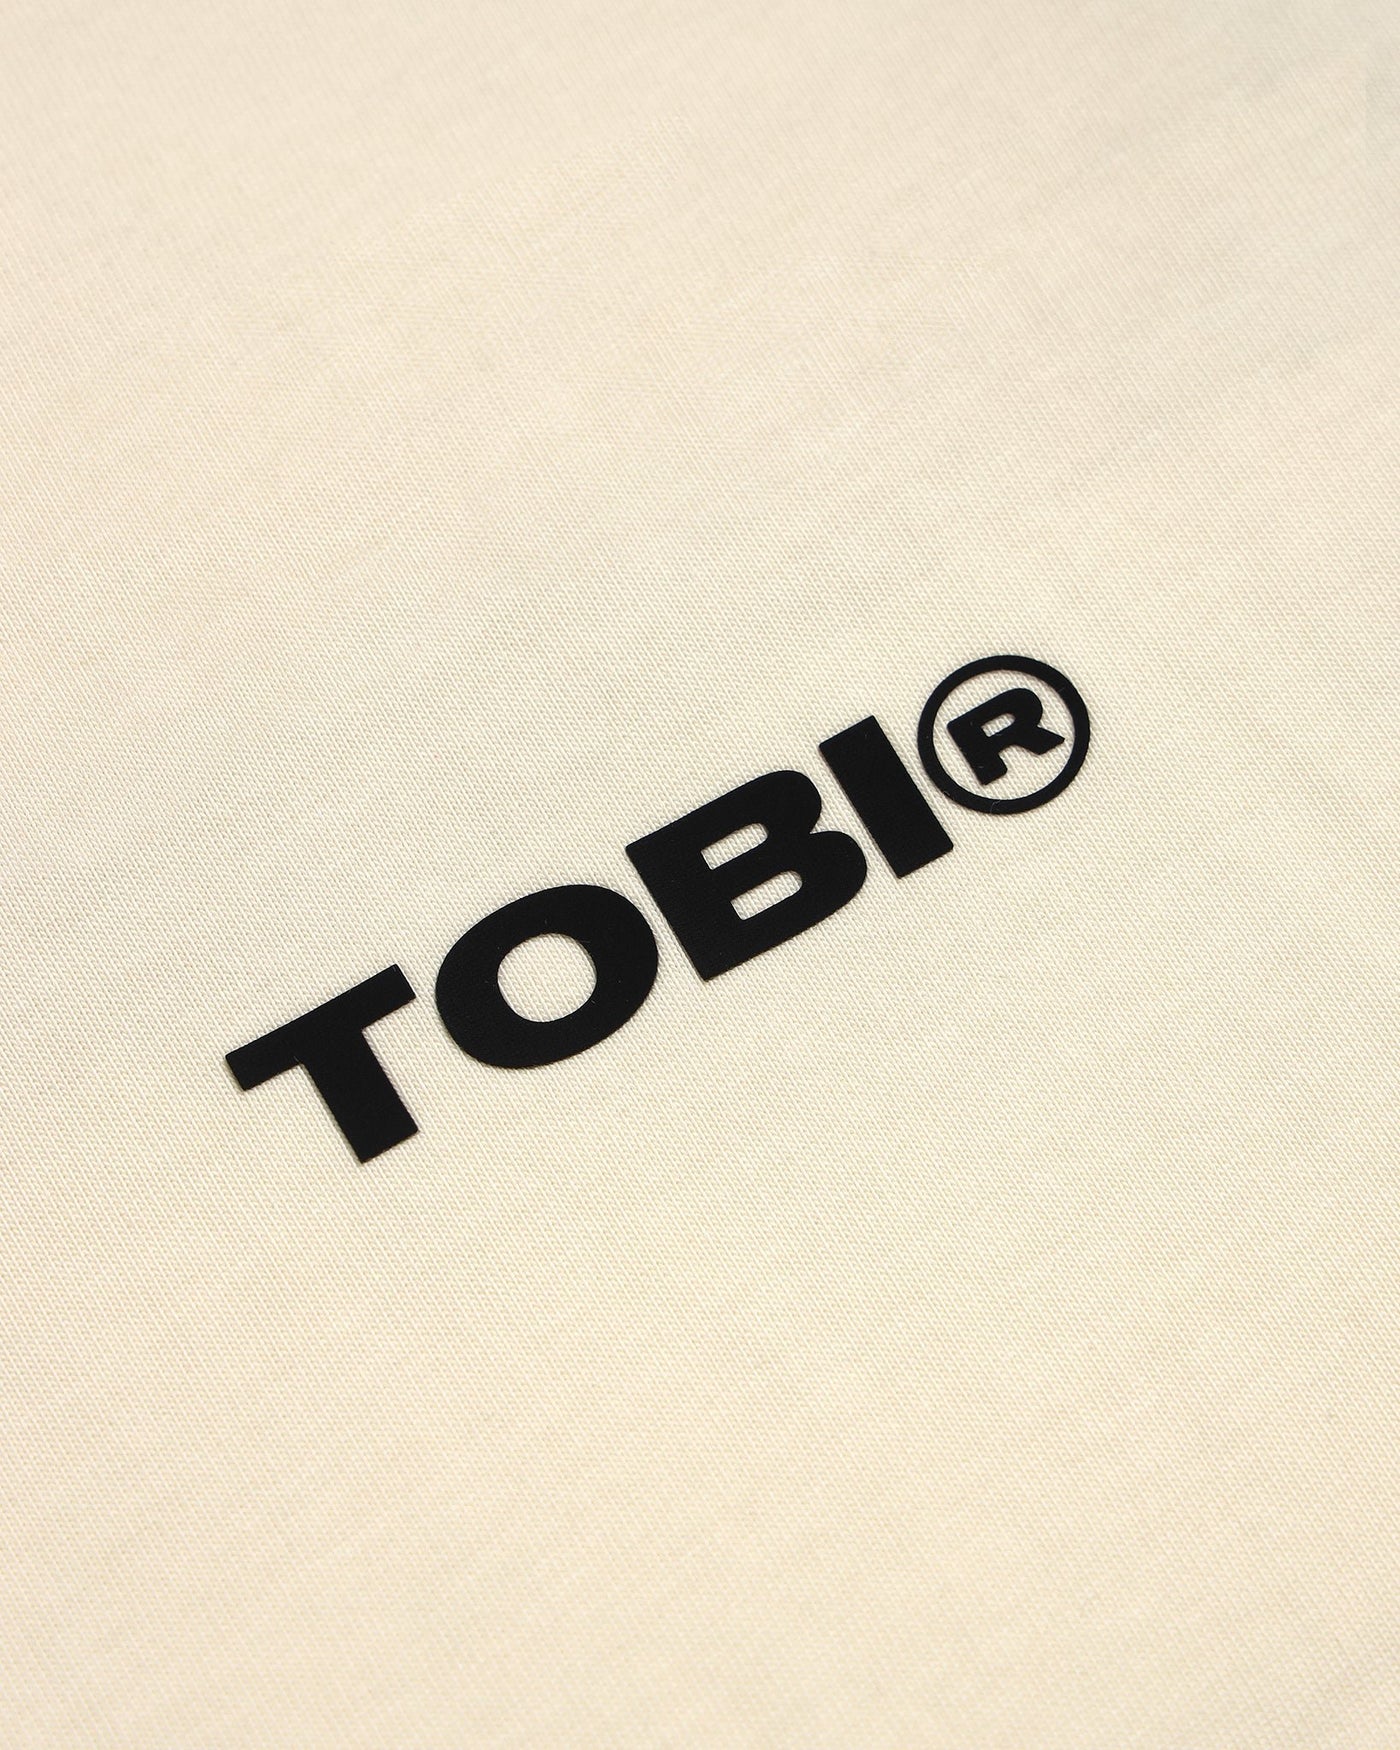 TOBI Basic Boxy T-shirt - Off White - TOBI